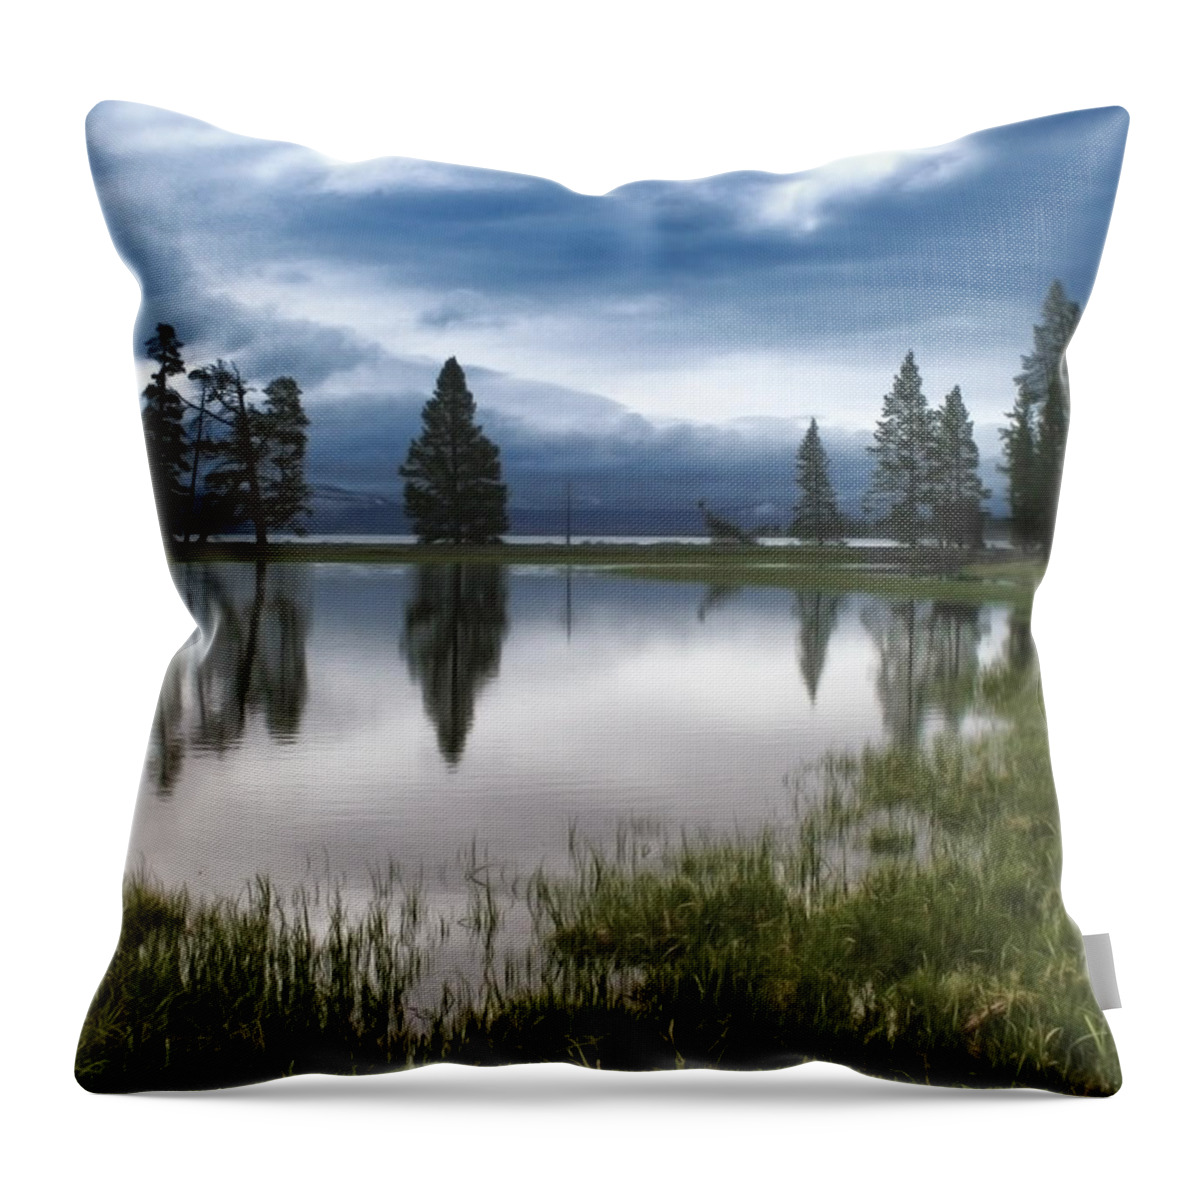 Yellowstone National Park Throw Pillow featuring the photograph Yellowstone Lake Reflection by Shari Jardina